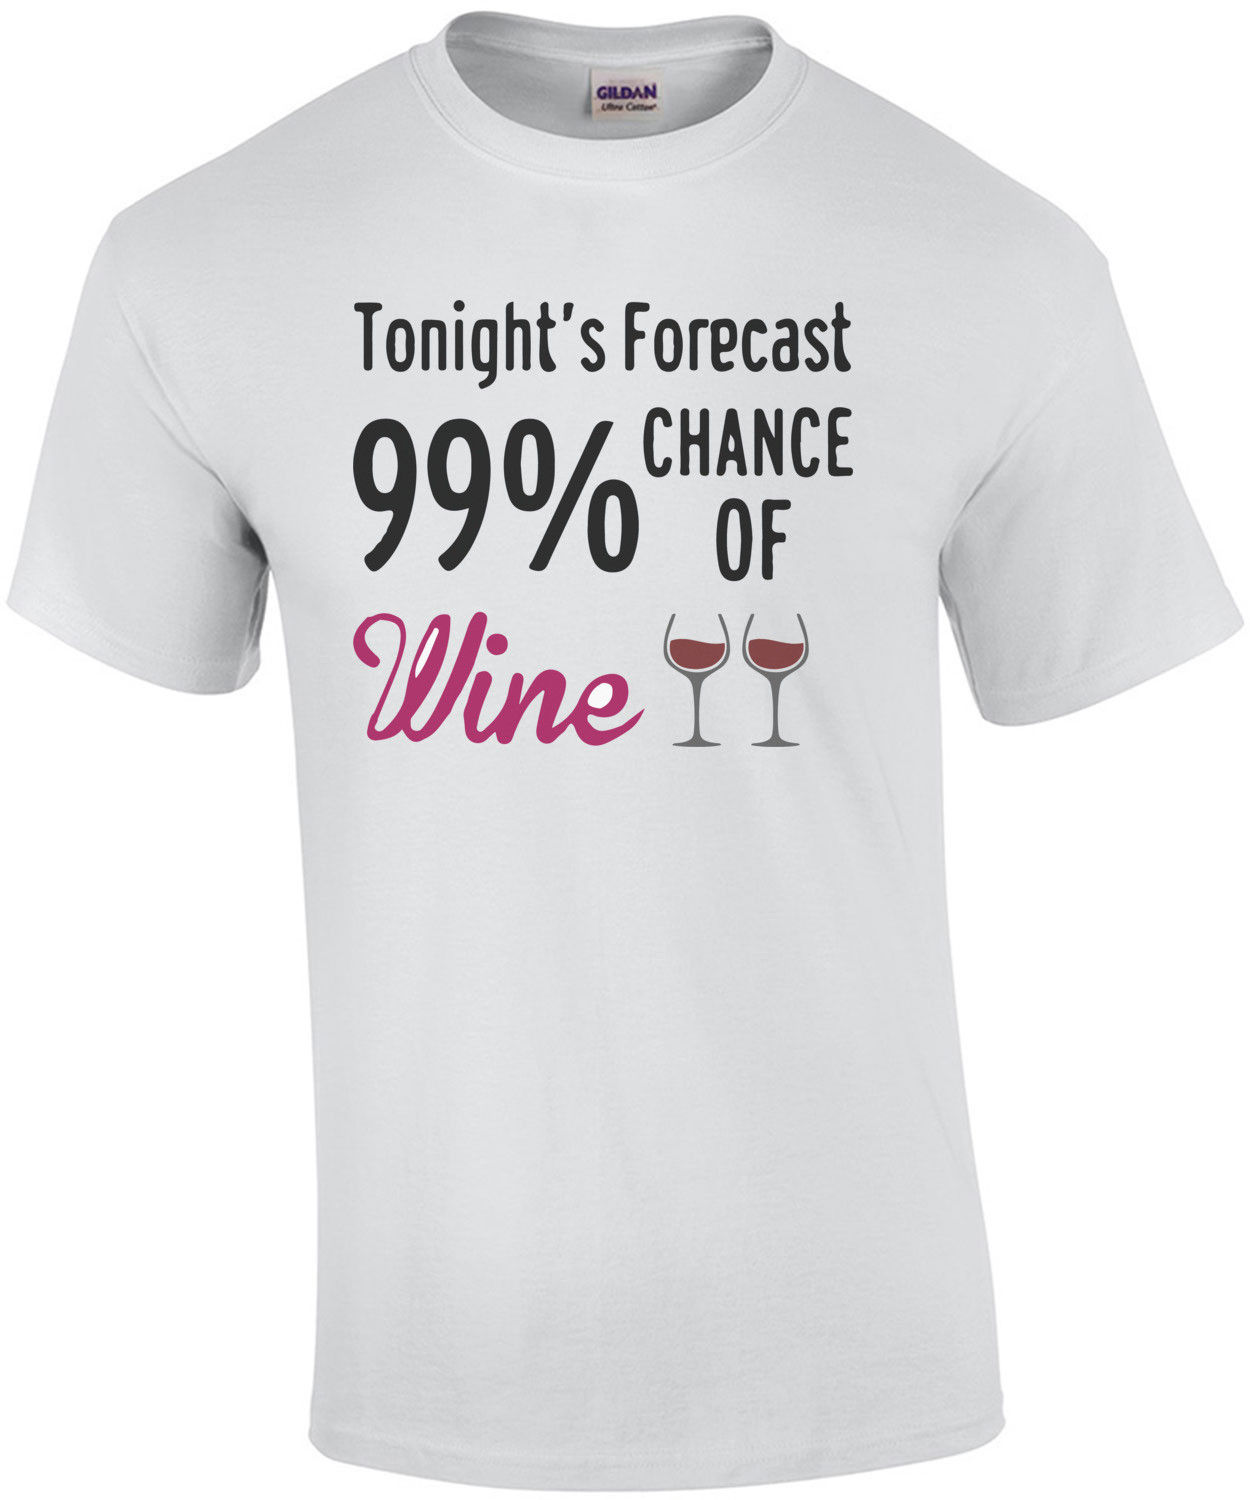 Tonight's Forecast 99% Chance of Wine. T-Shirt